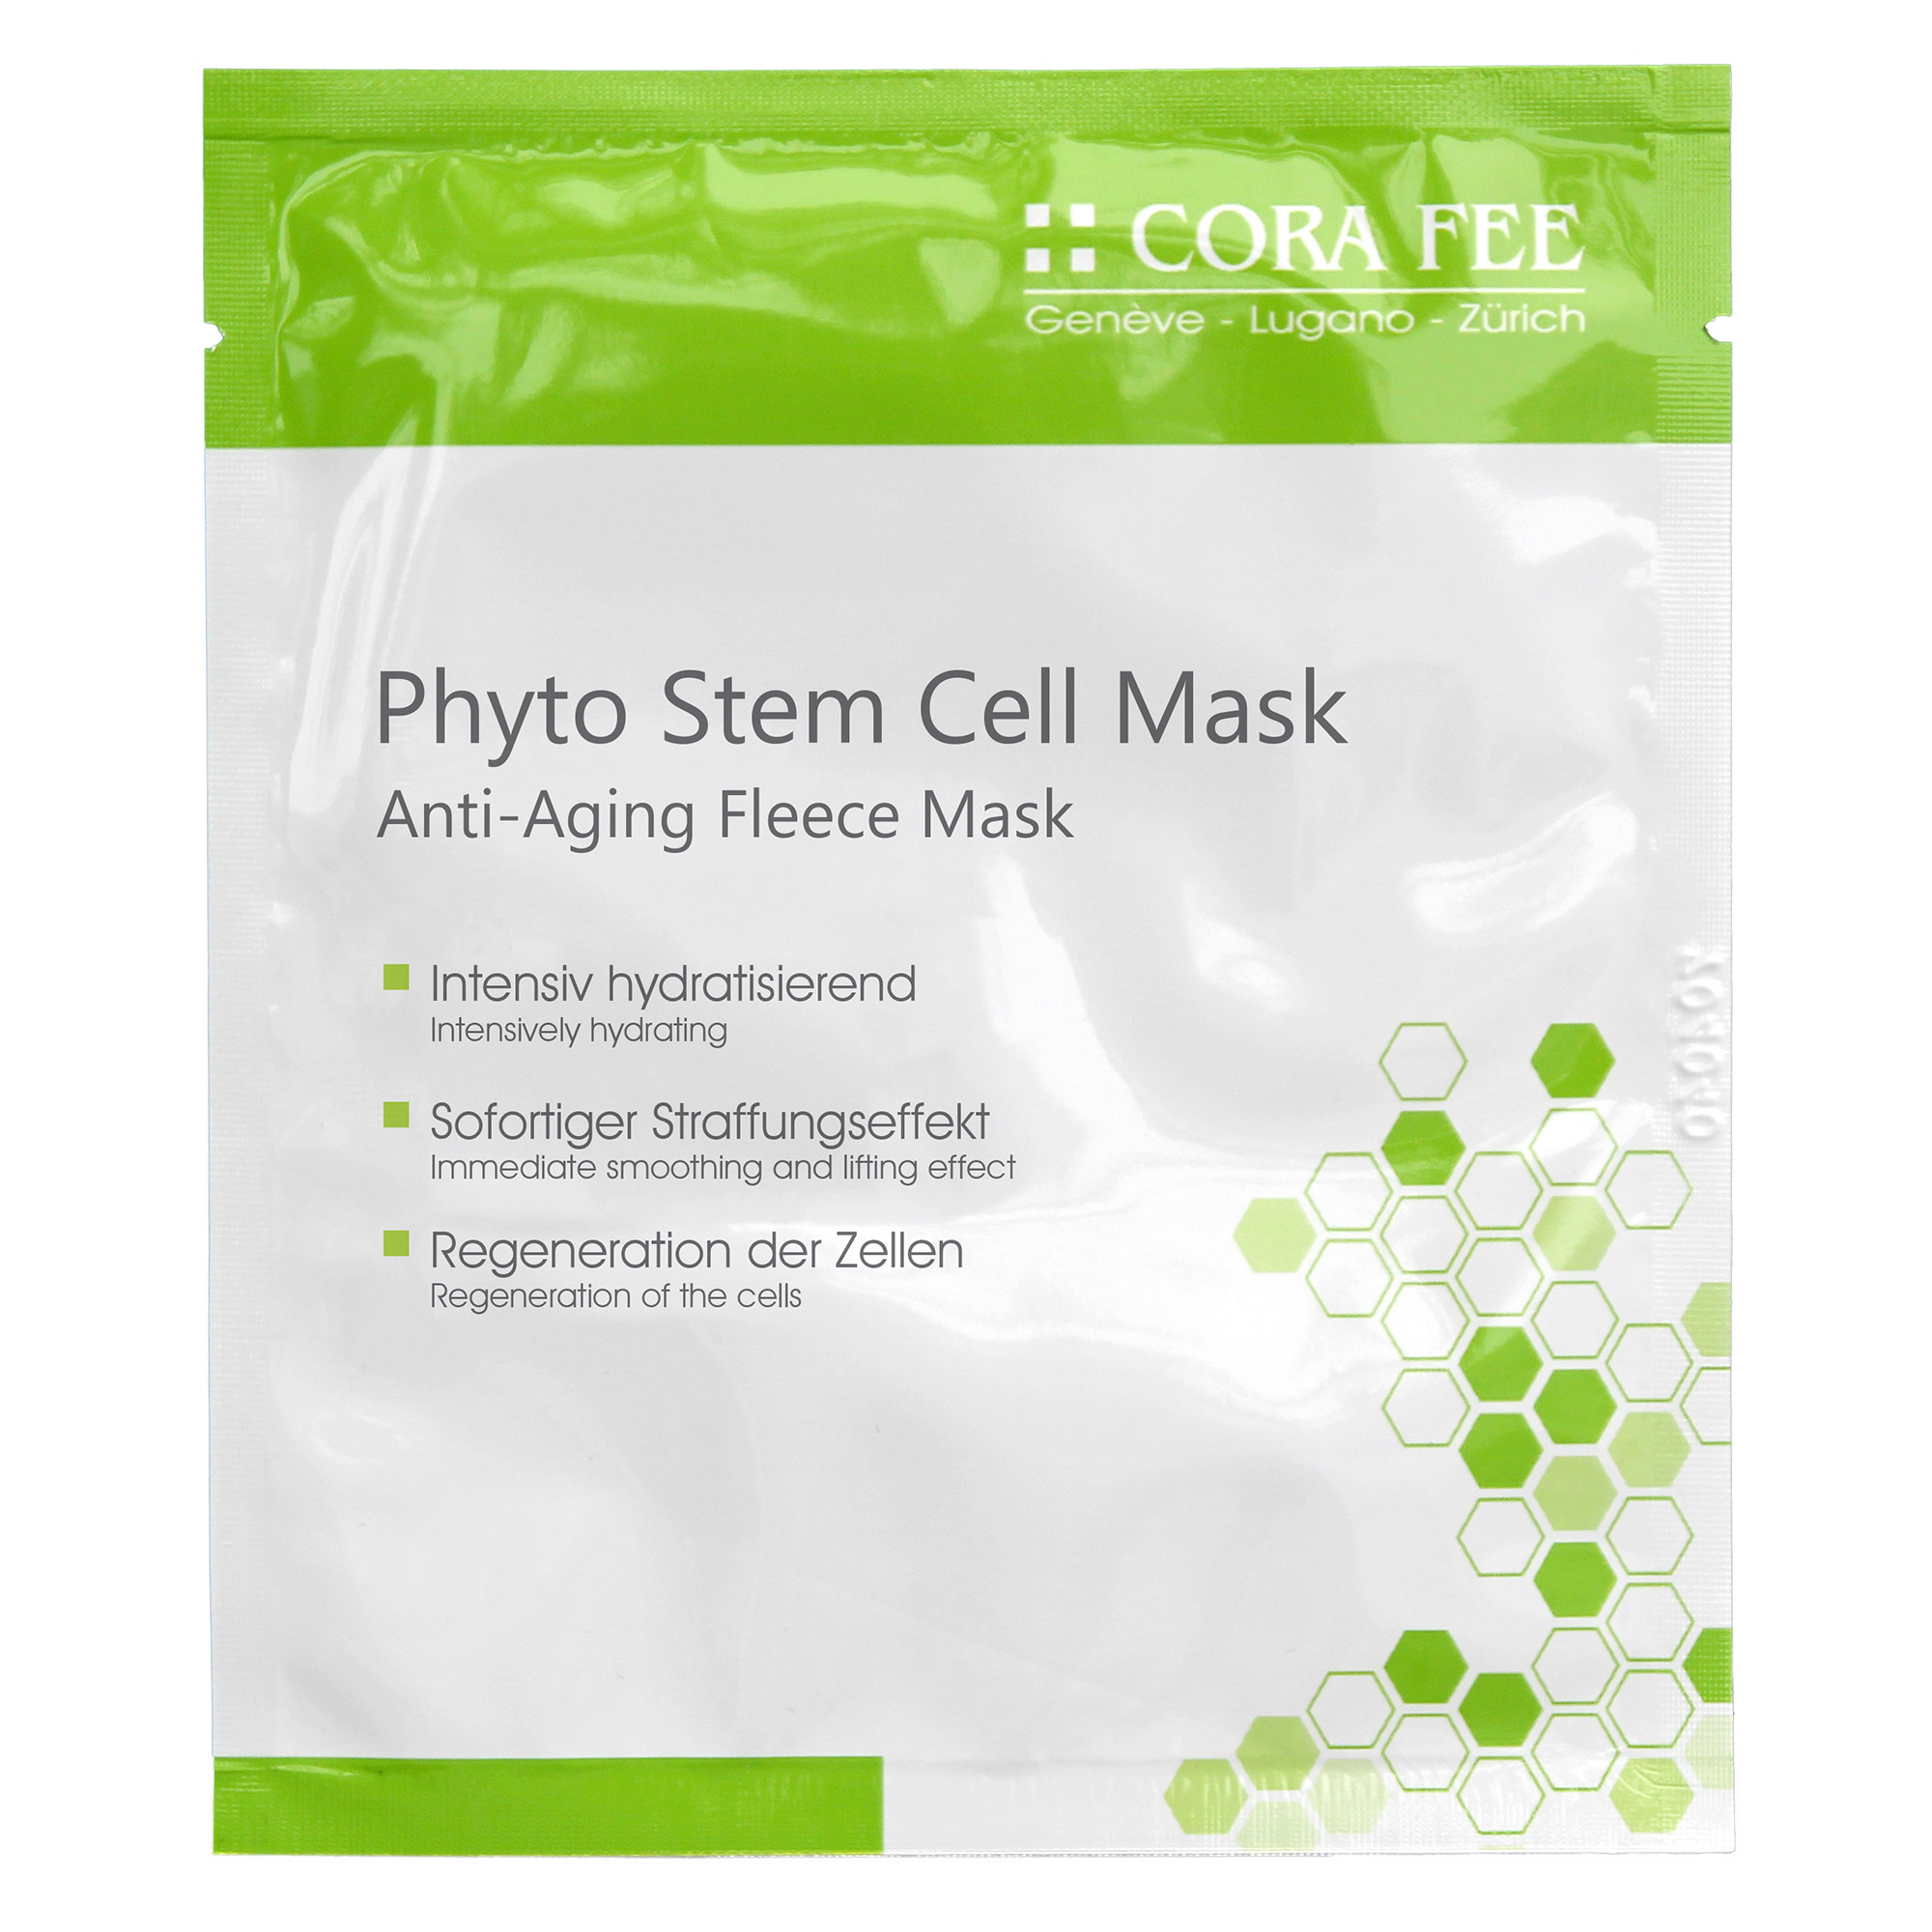 Cora Fee Phyto Stem Cell Mask, 5 fleece masks